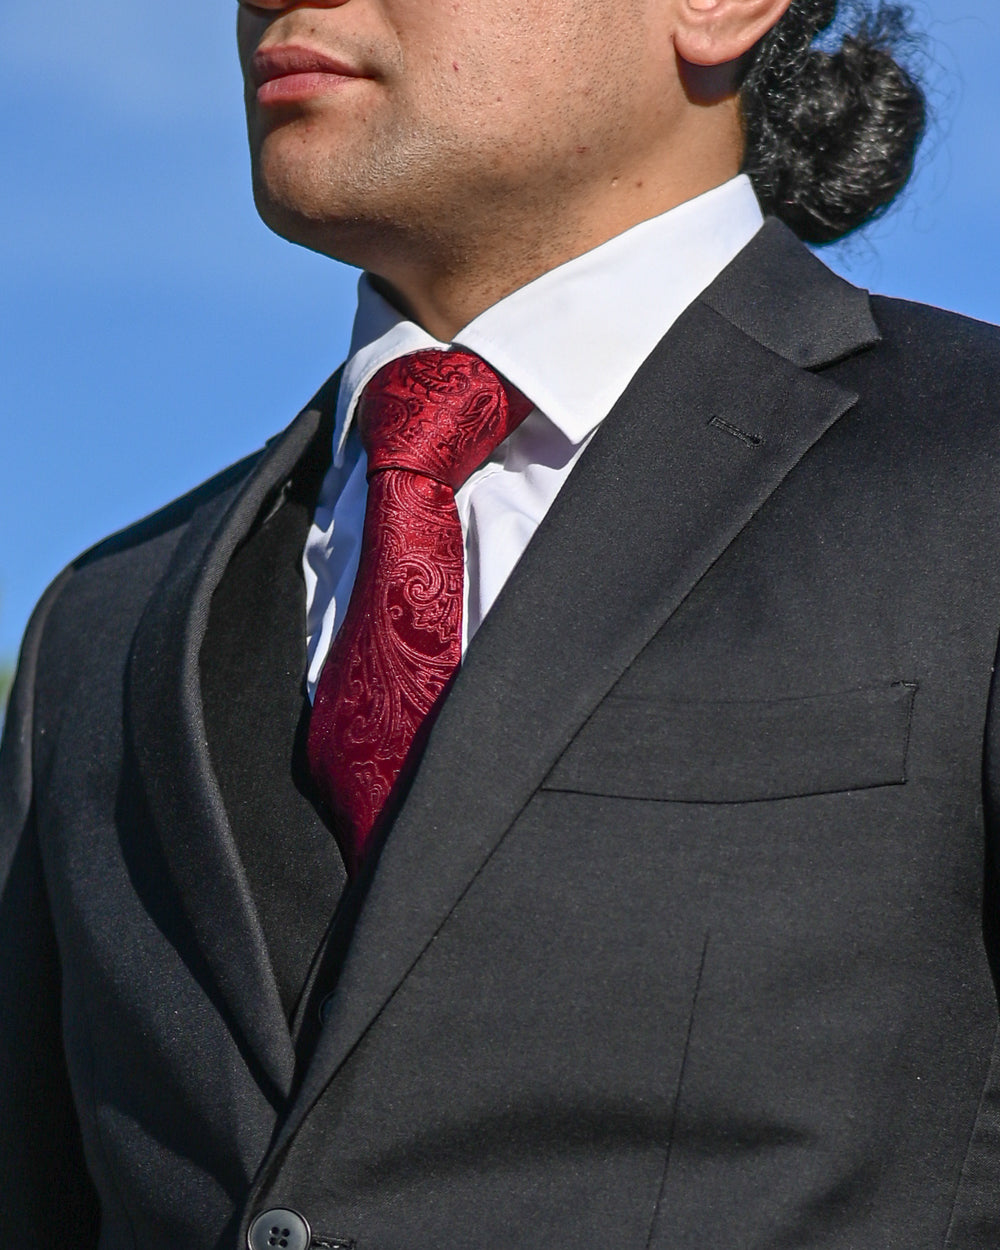 Crimson red paisley tie worn with 3-piece black suit